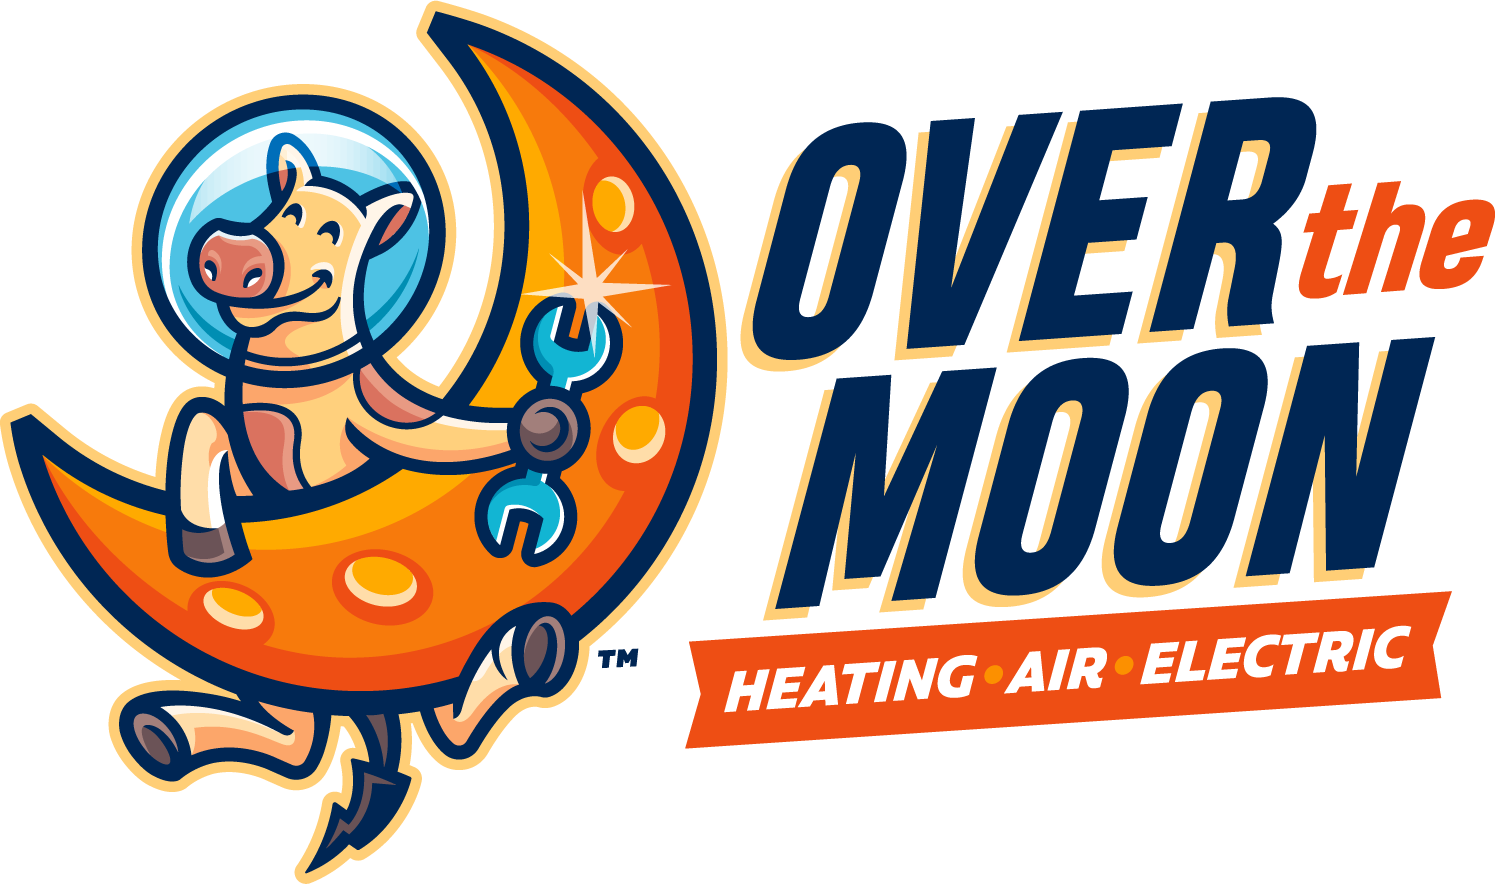 Over the Moon Logo